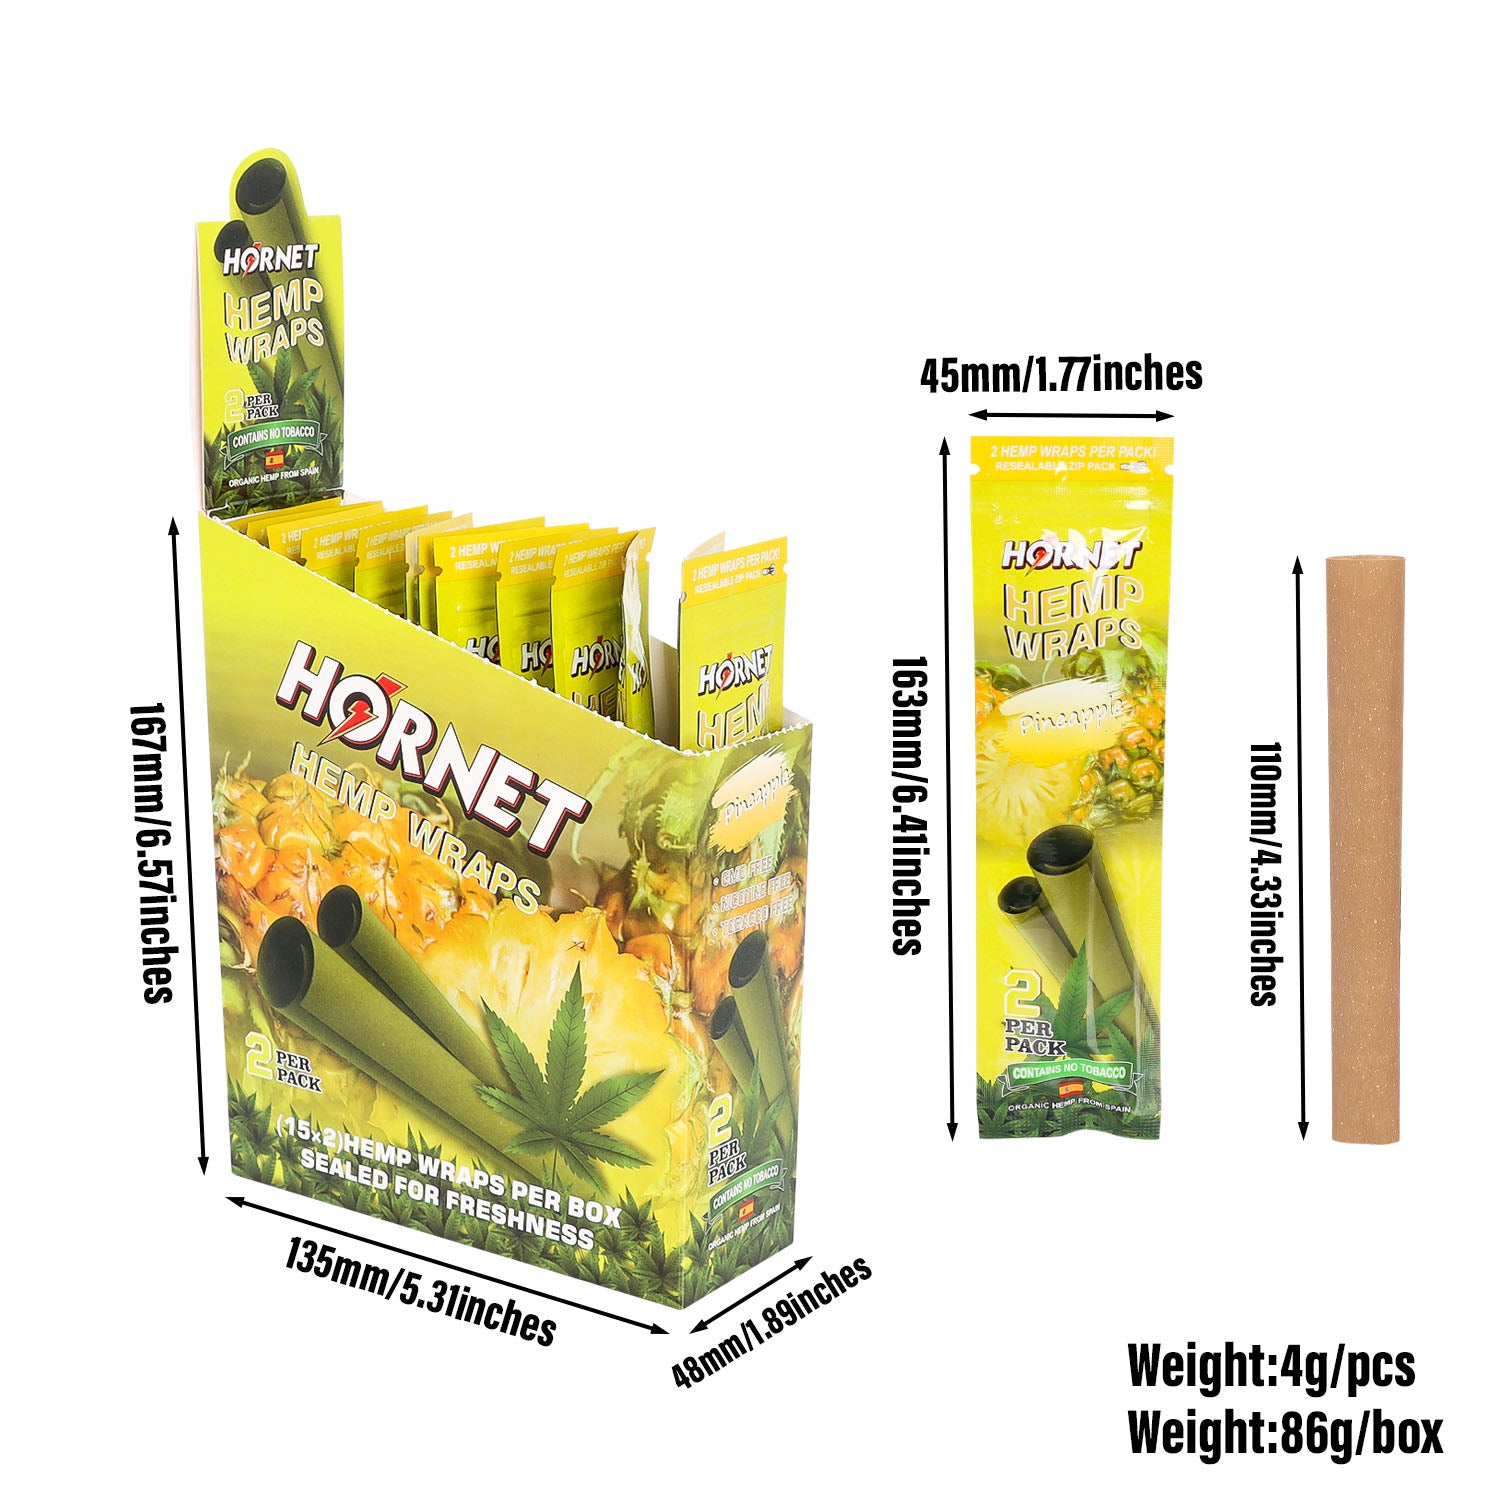 Hornet Pineapple Flavoured Hemp Blunt Wraps 30 Hemp Wraps Per Box